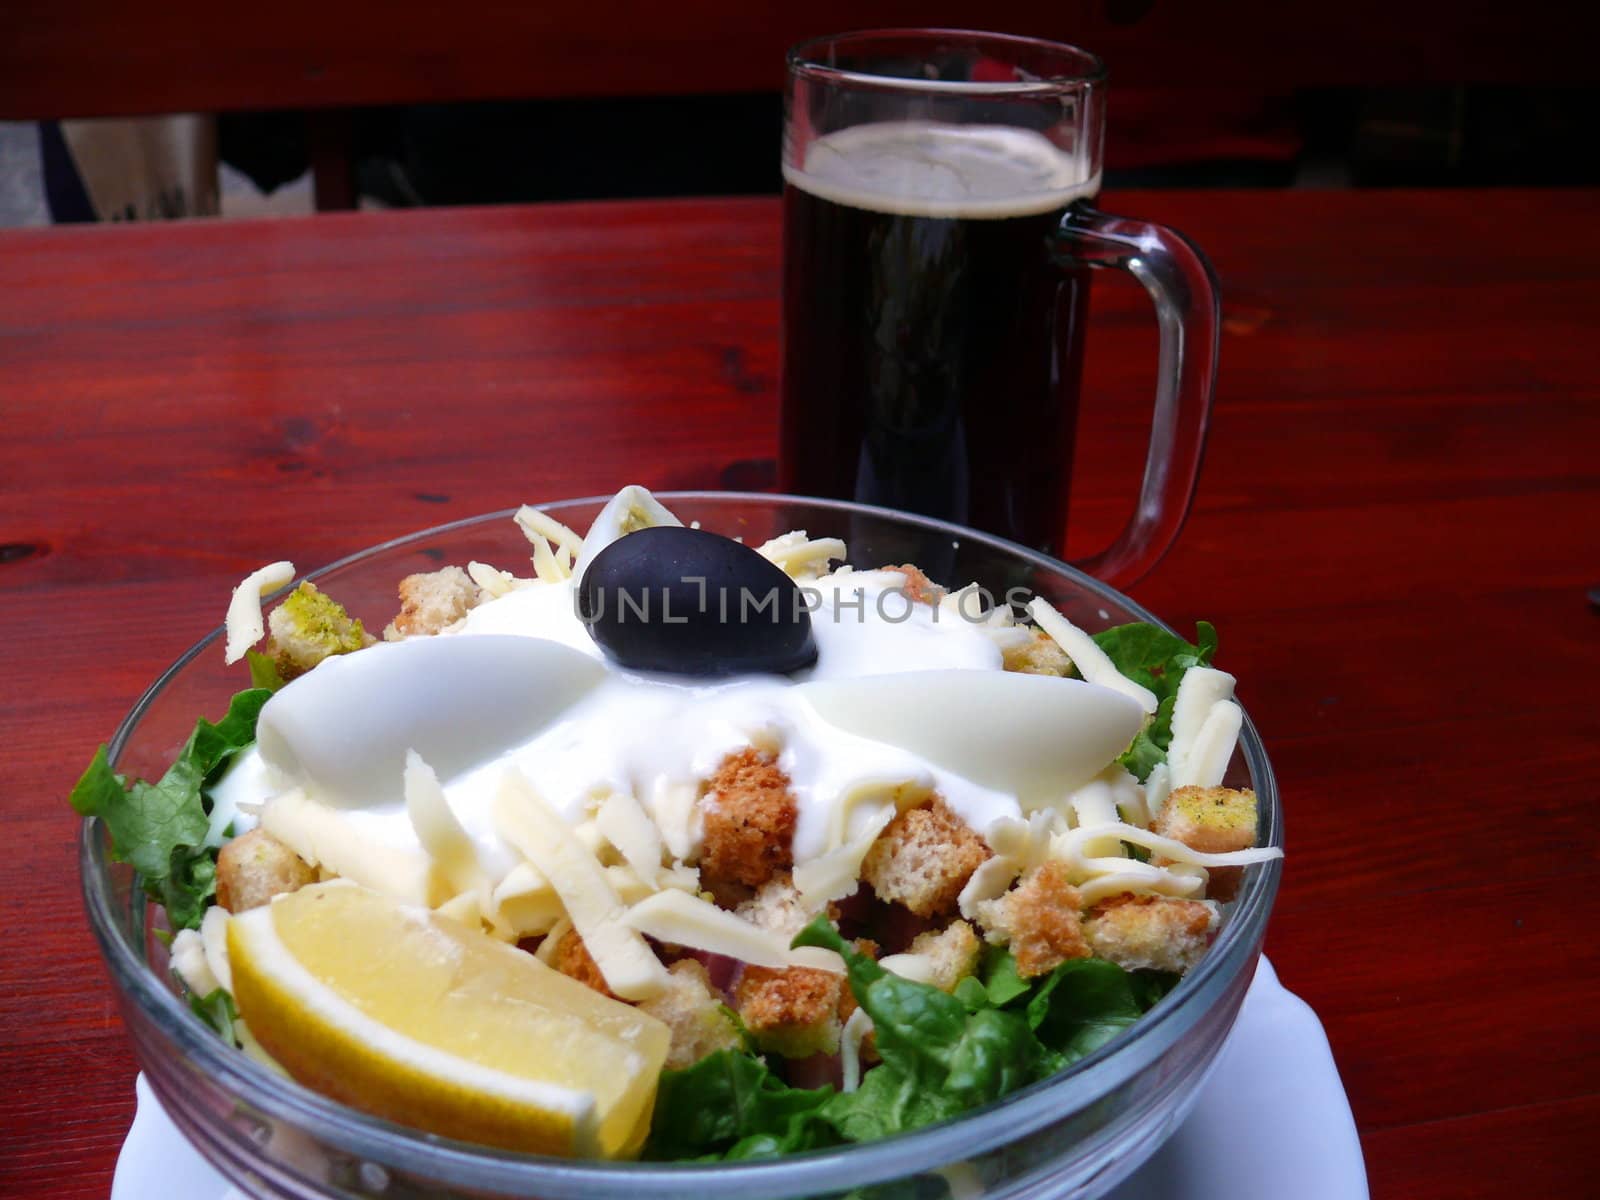 Greek salad with Kvas. Low fat dinner